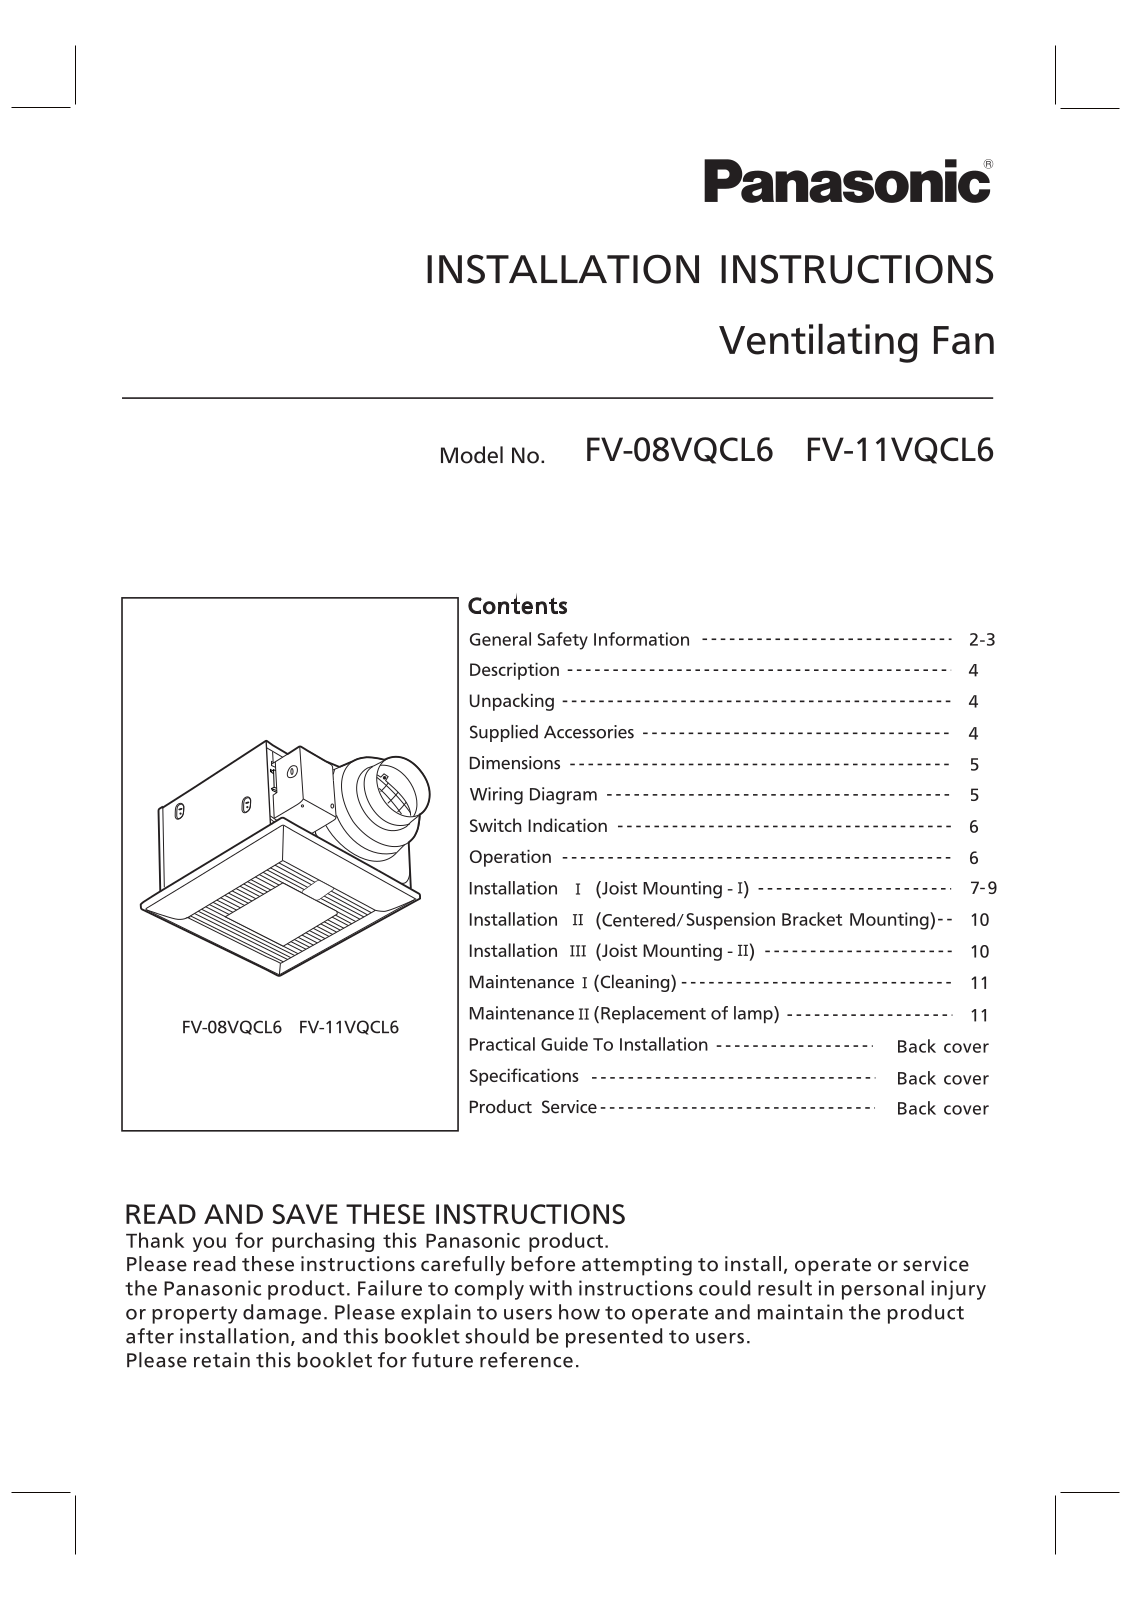 Panasonic FV-11VQCL6 User Manual